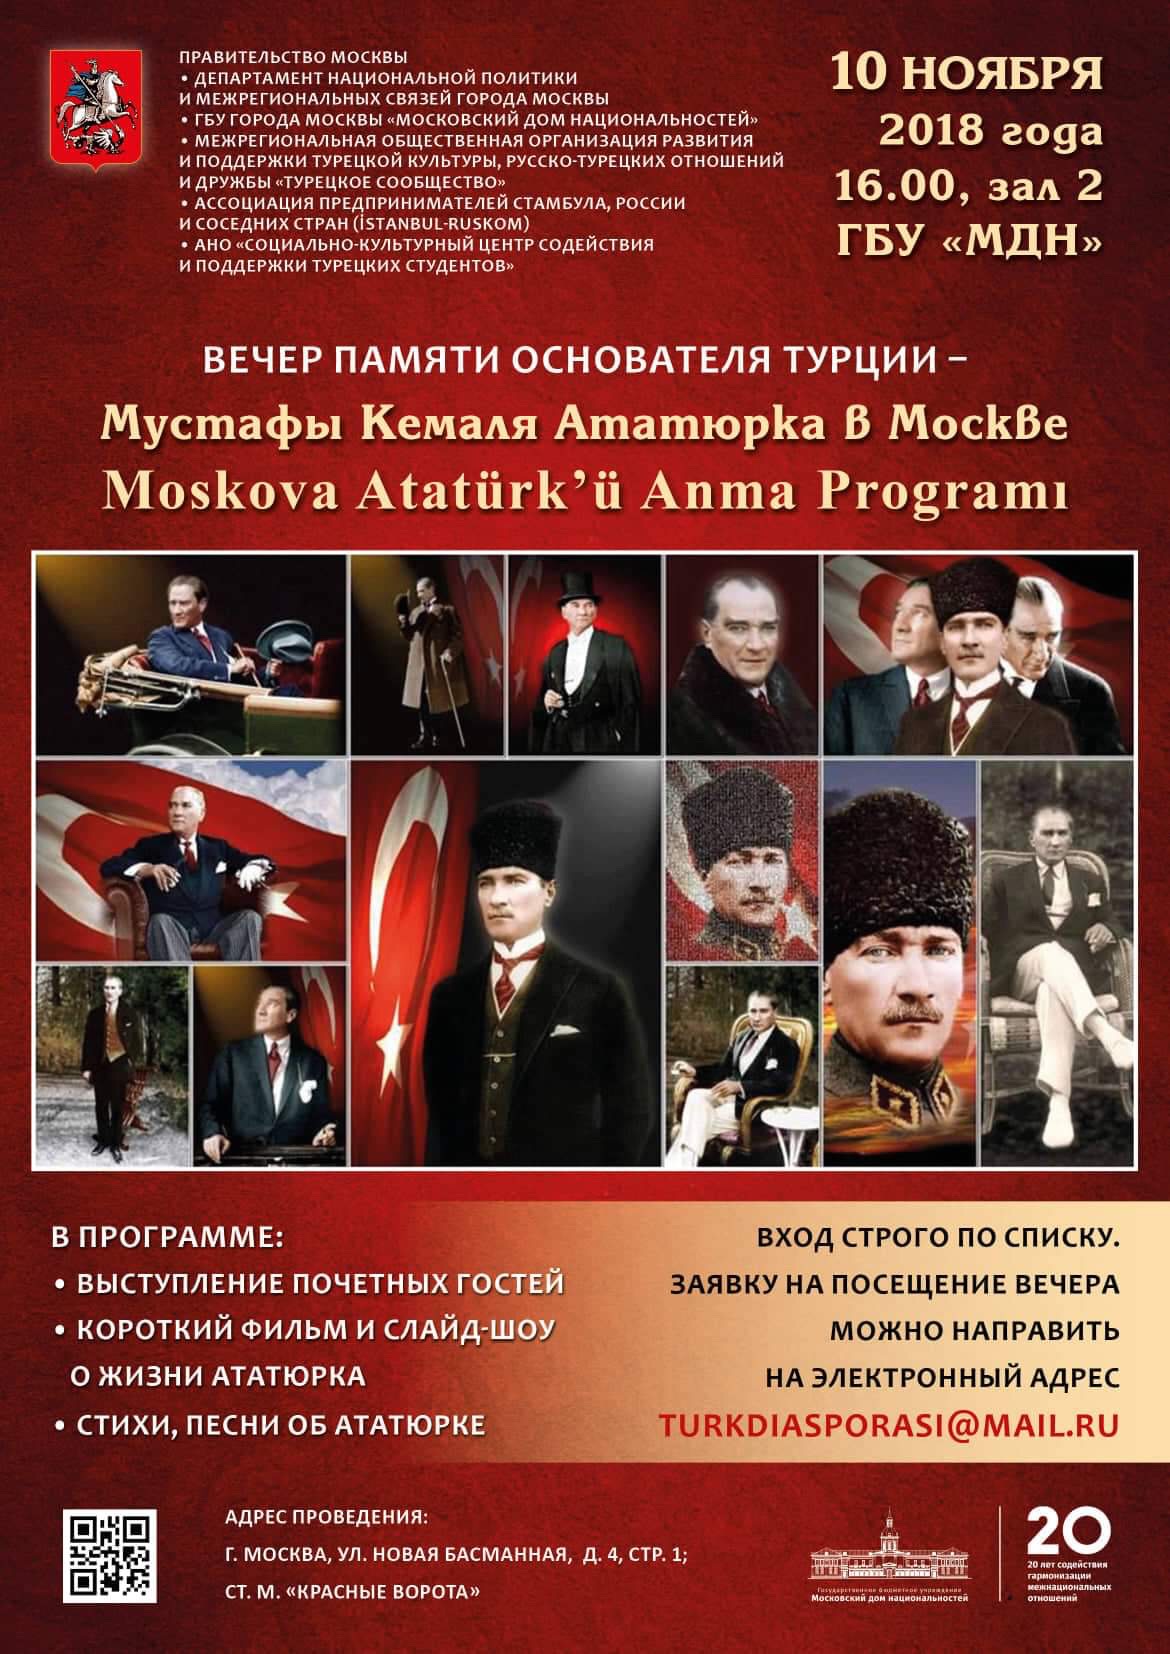 Moskova Atatürk’ü Anma Programı